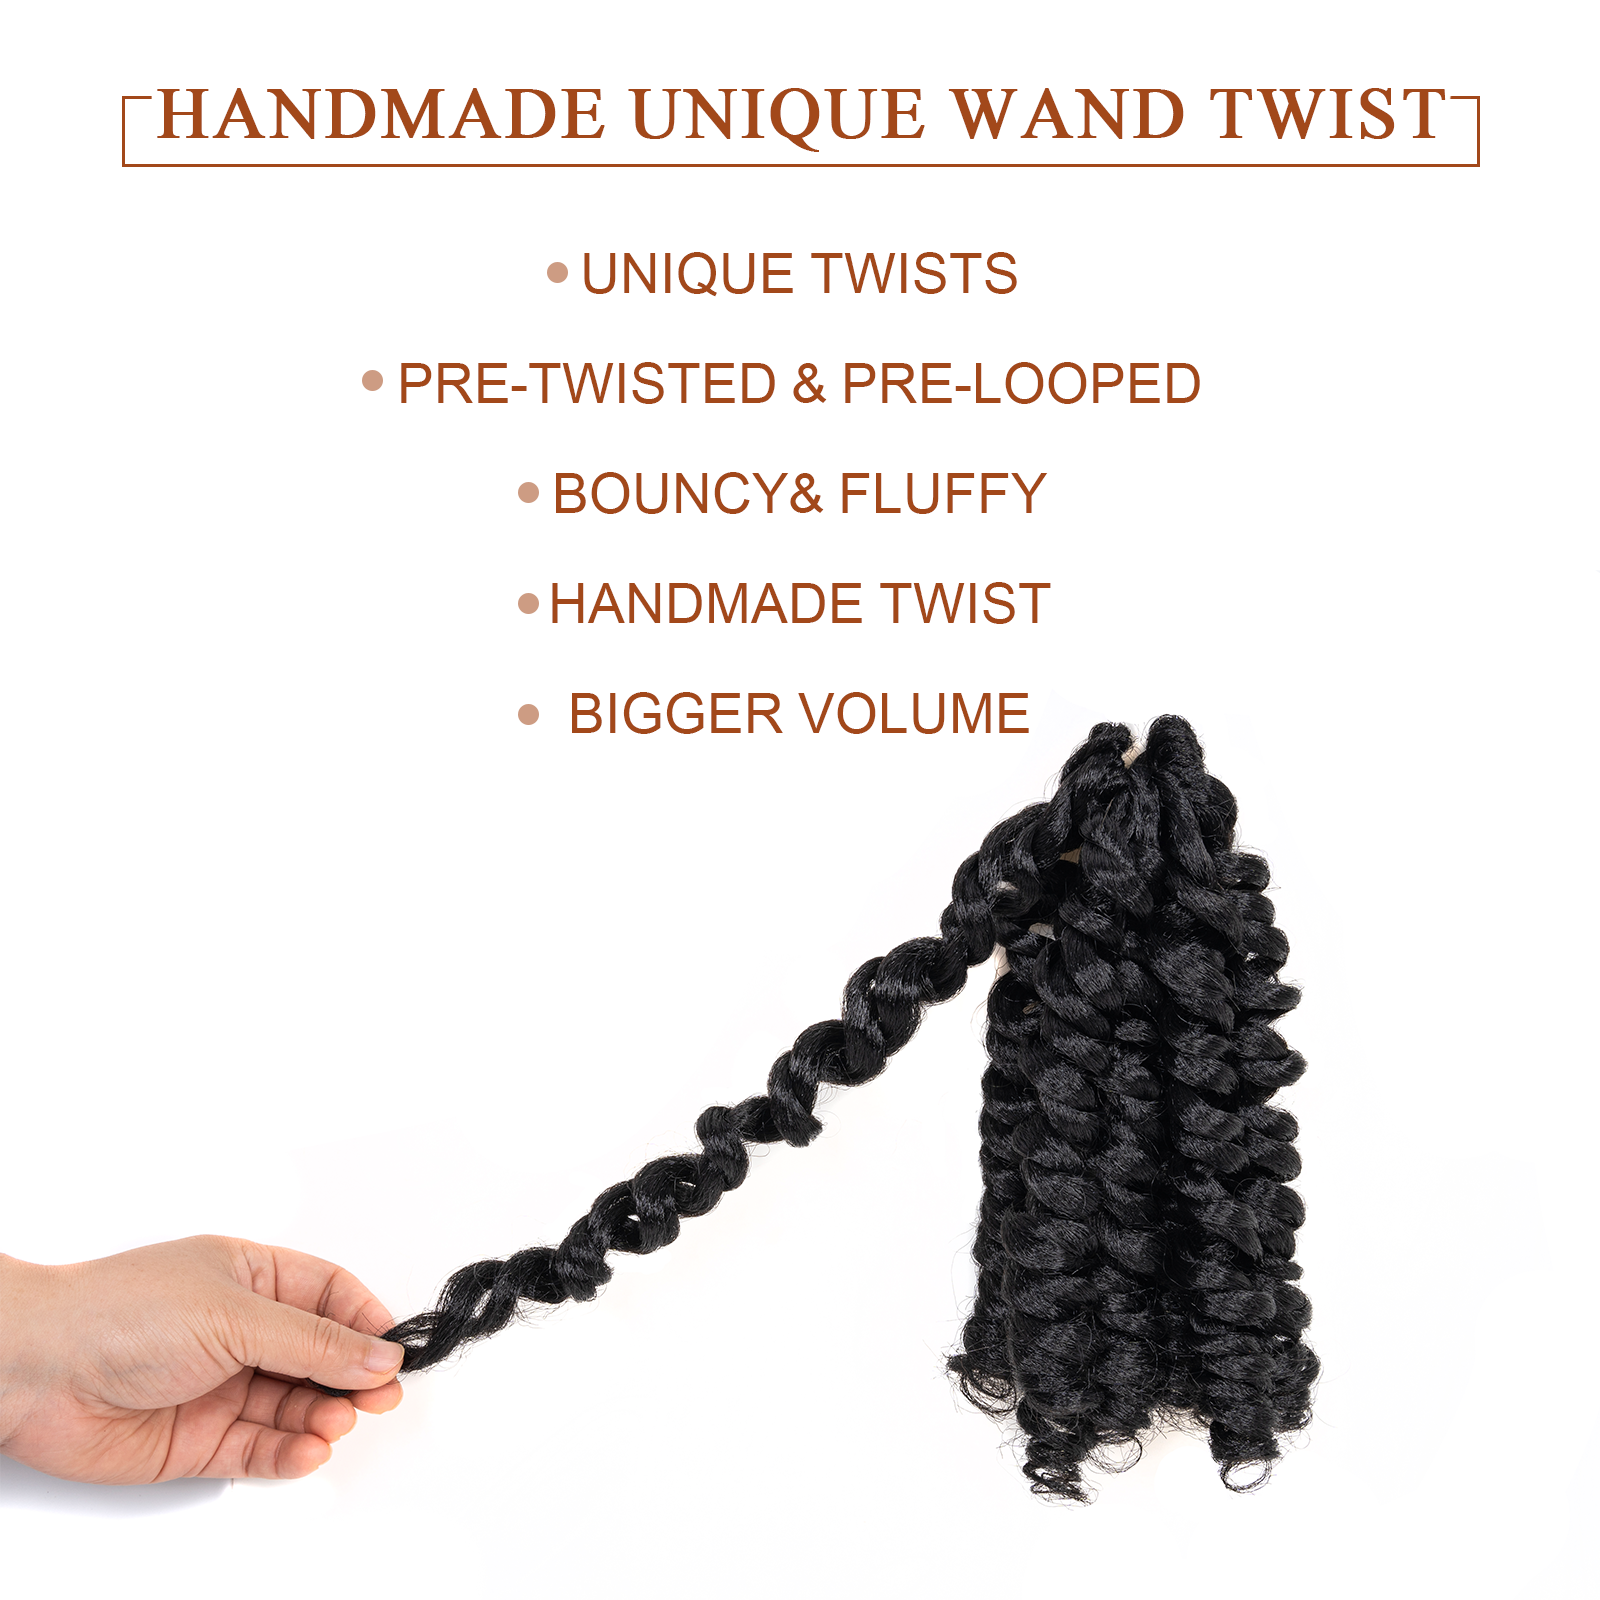 𝗙𝗿𝗮𝗻𝗸𝗲𝗻𝘀𝘁𝗲𝗶𝗻'𝘀 𝗙𝗿𝗶𝘇𝘇 | Toyotress Wand Twist Crochet Hair |10-12